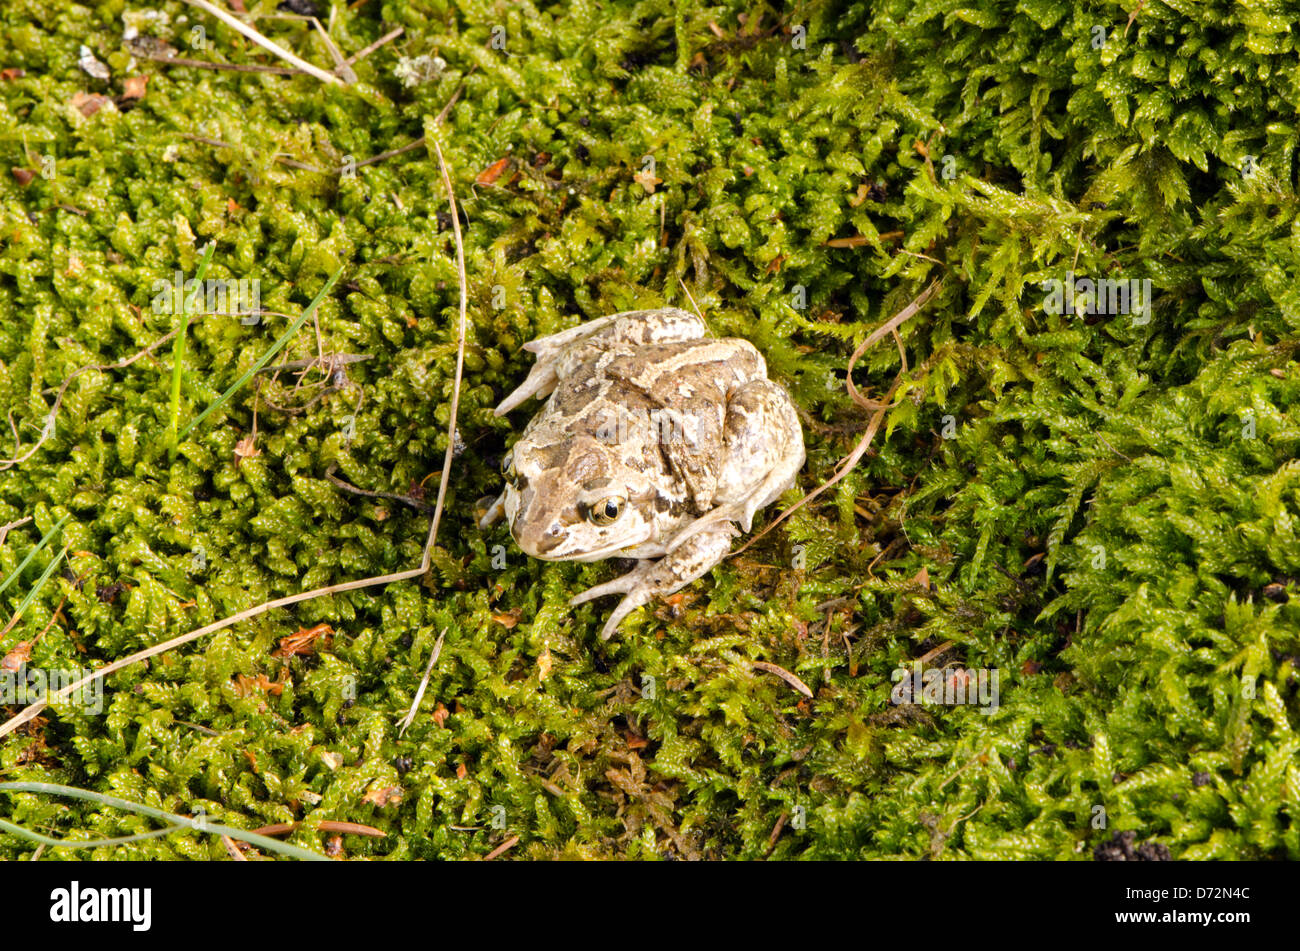 Politica europea comune in materia di aglio spadefoot toad Pelobates fuscus su swamp moss. Foto Stock